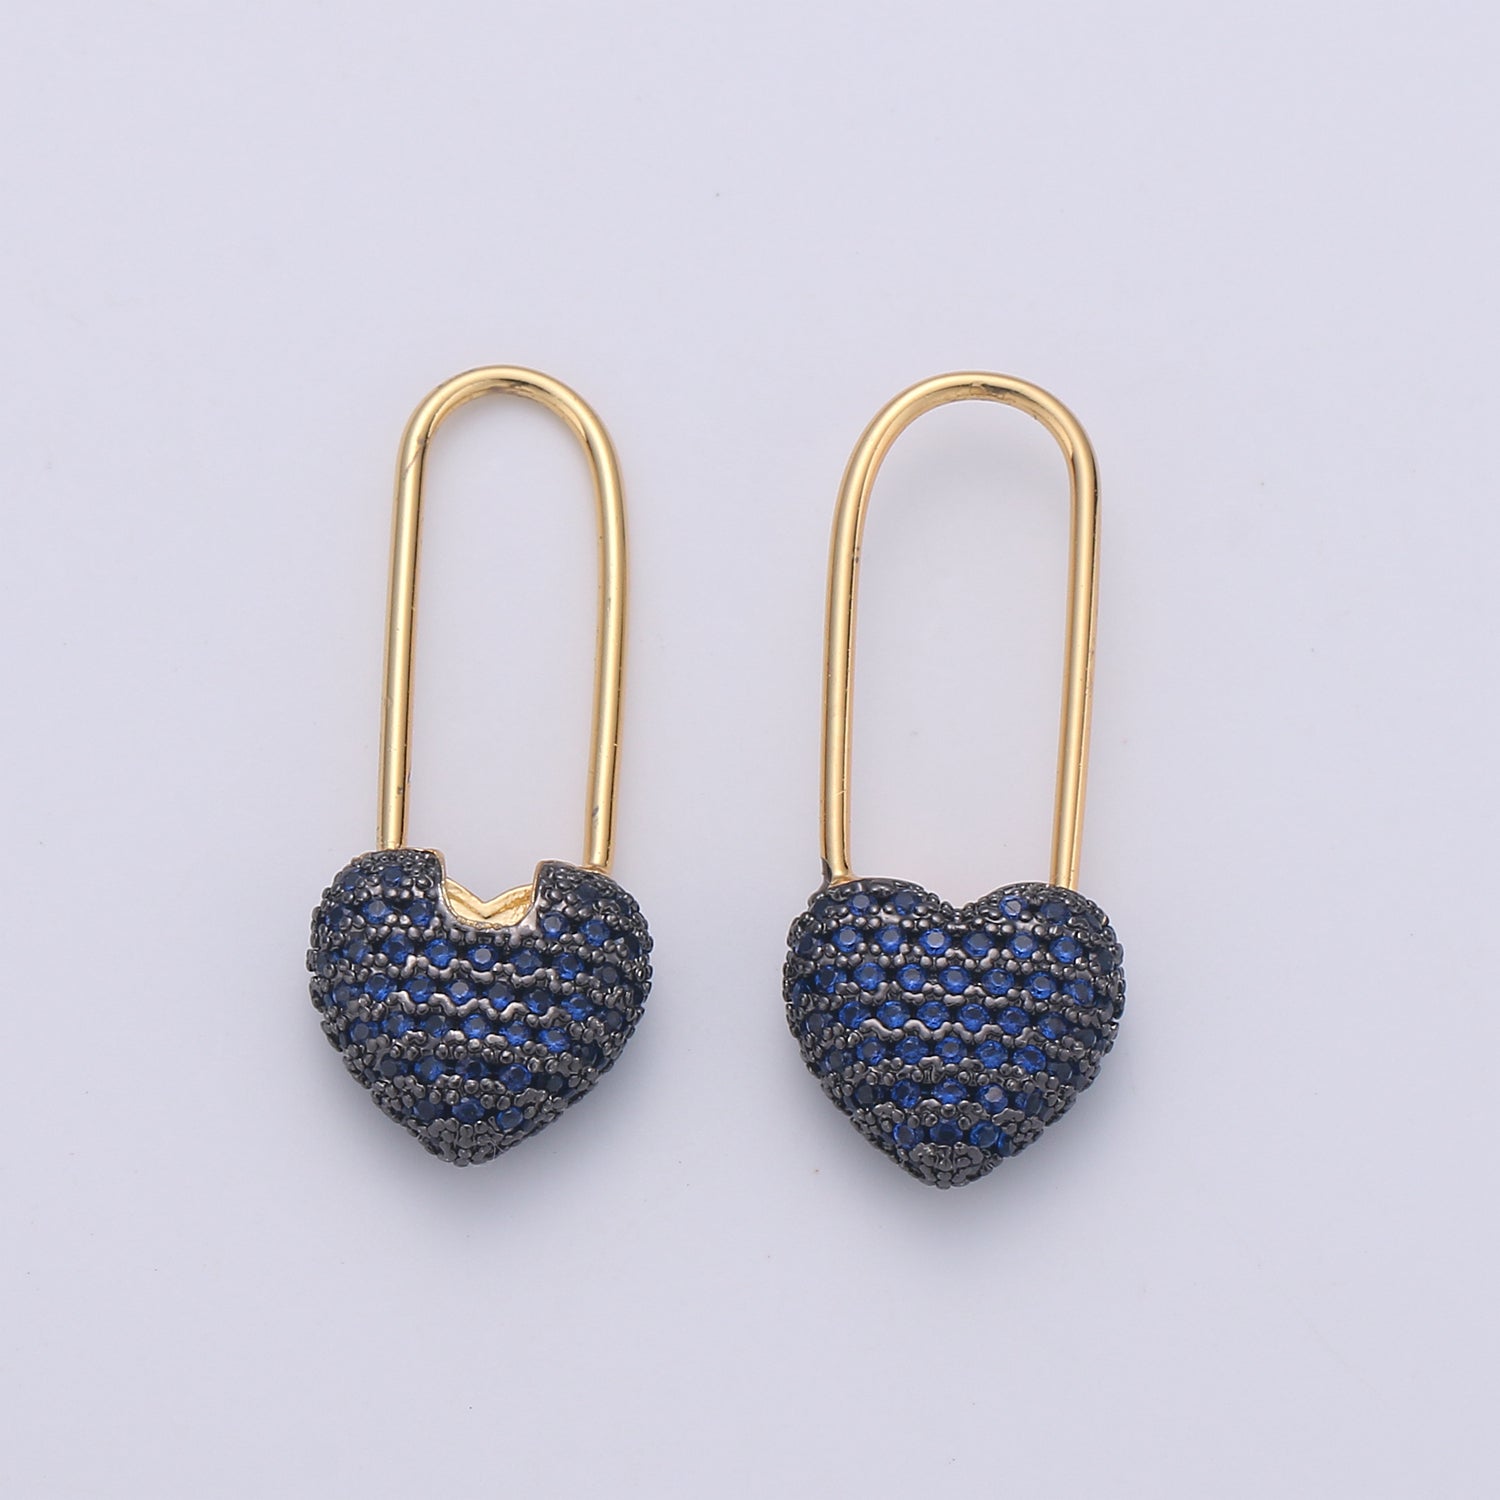 1 Pair Gold Heart earrings Pin earrings Heart jewelry Colorful earrings Unique jewelry Gold earrings Dainty earrings Delicate Earrings - DLUXCA